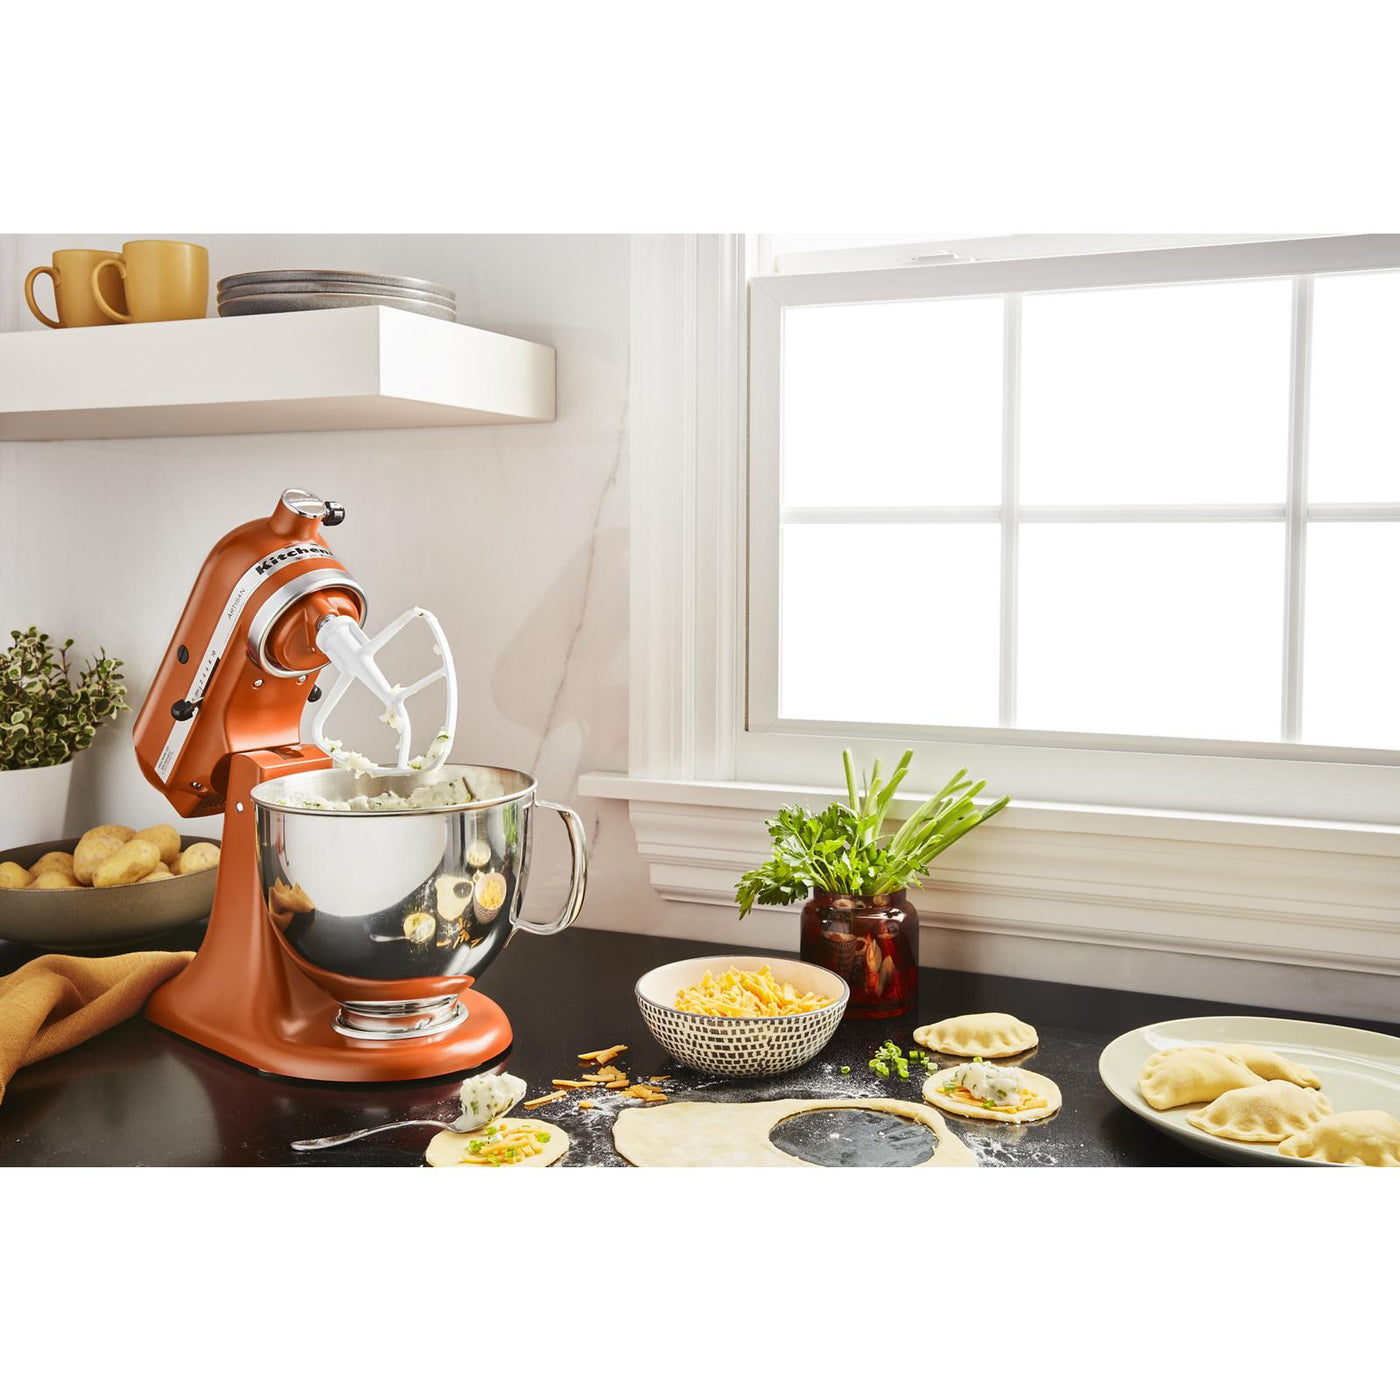 KitchenAid Scorched Orange Artisan® Series 5 Quart Tilt-Head Stand Mixer - KSM150PSSC